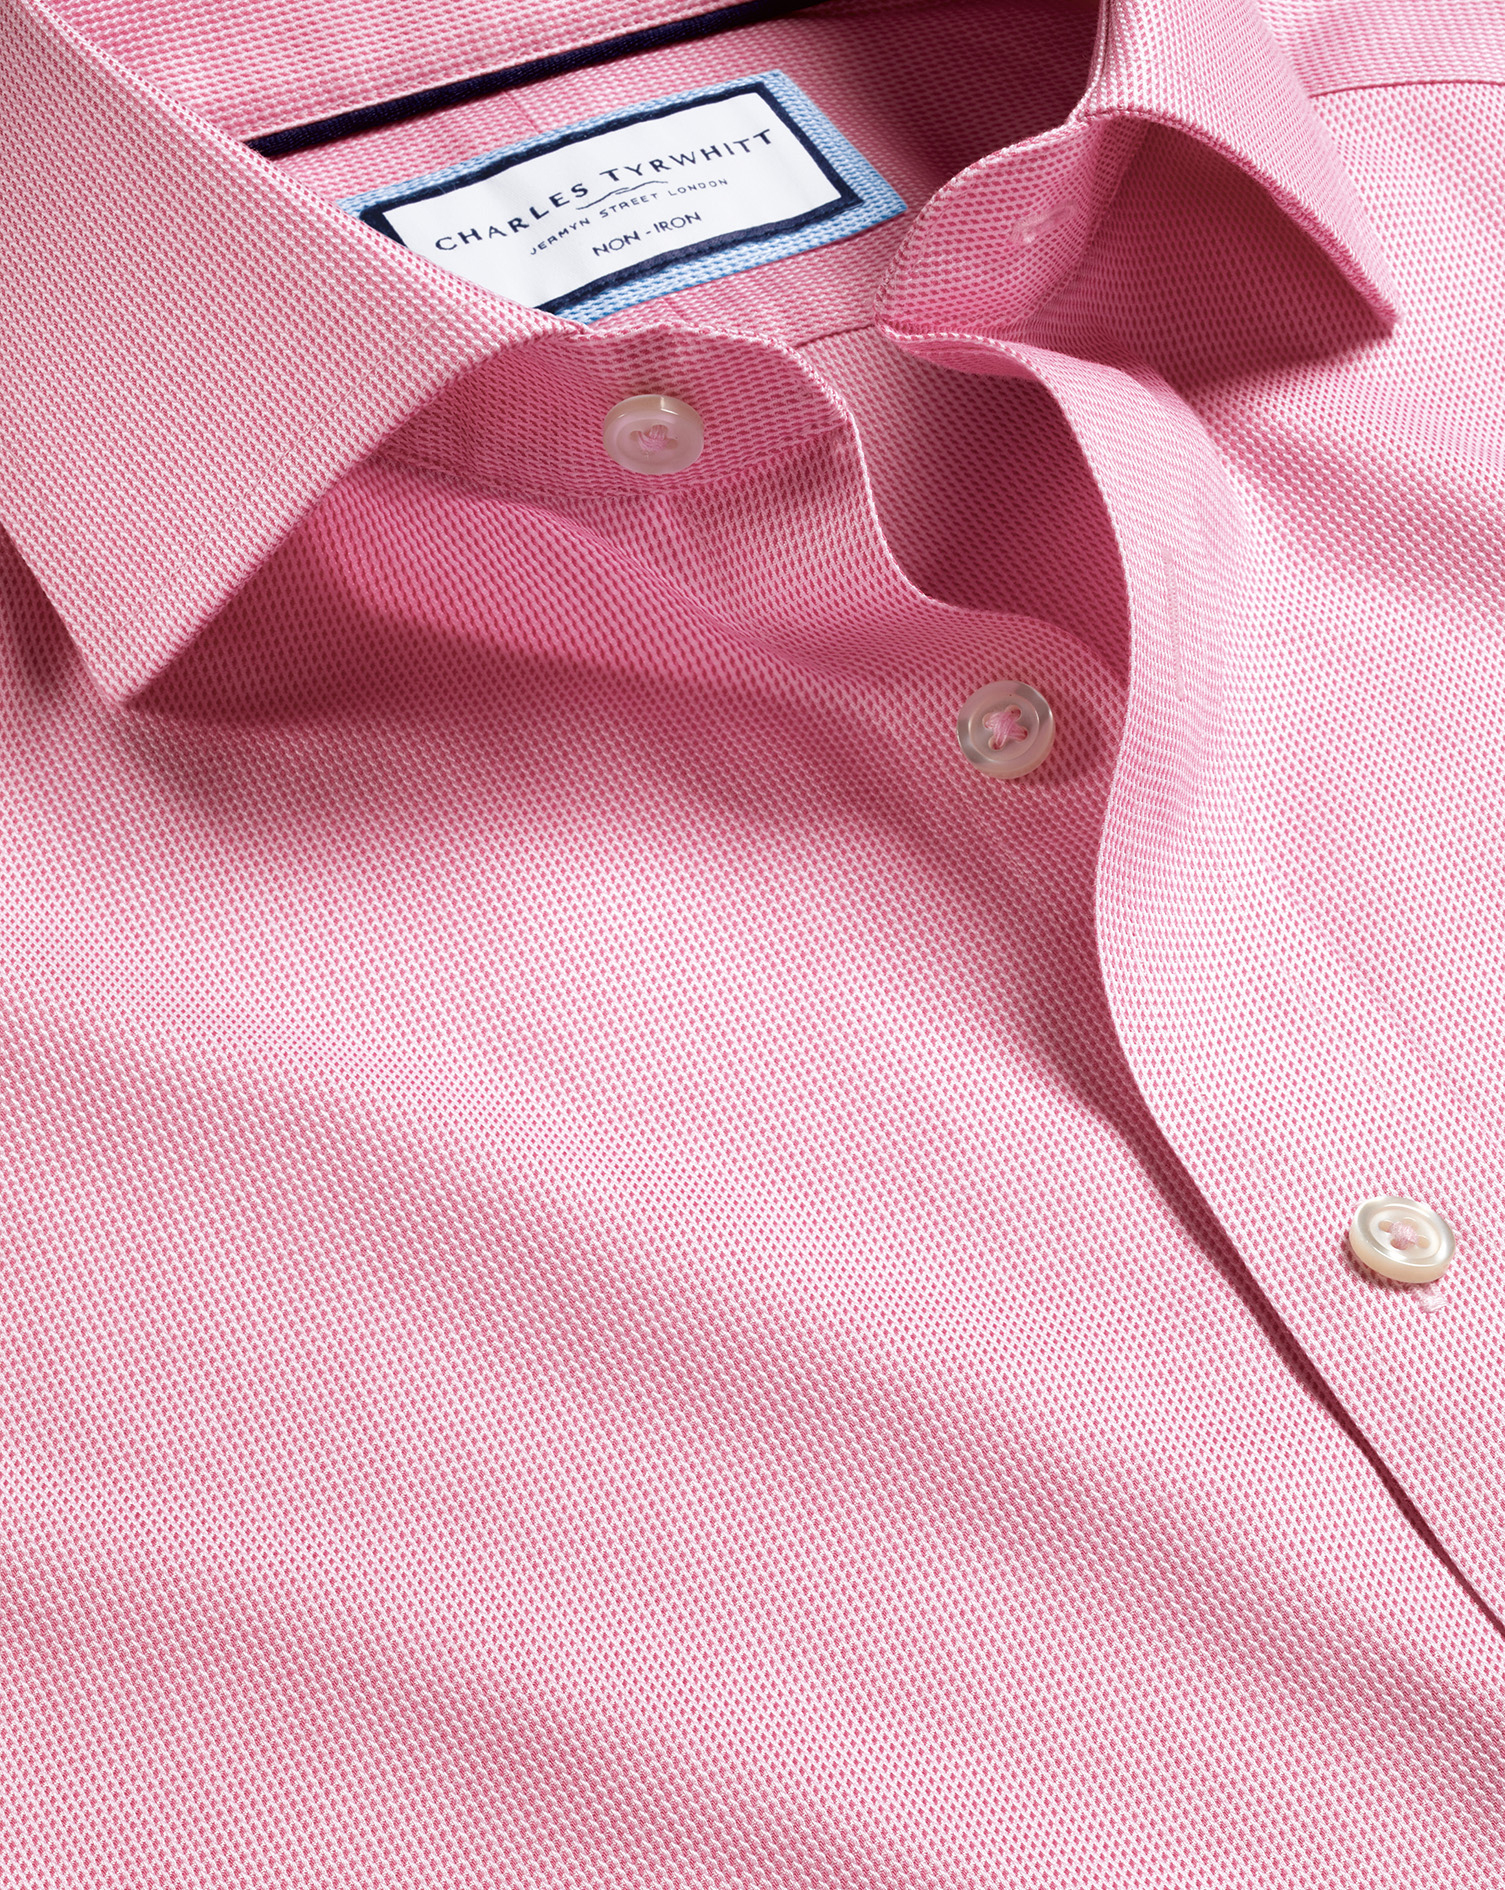 Men's Charles Tyrwhitt Cutaway Collar Non-Iron Clifton Weave Dress Shirt - Pink Single Cuff Size 16/